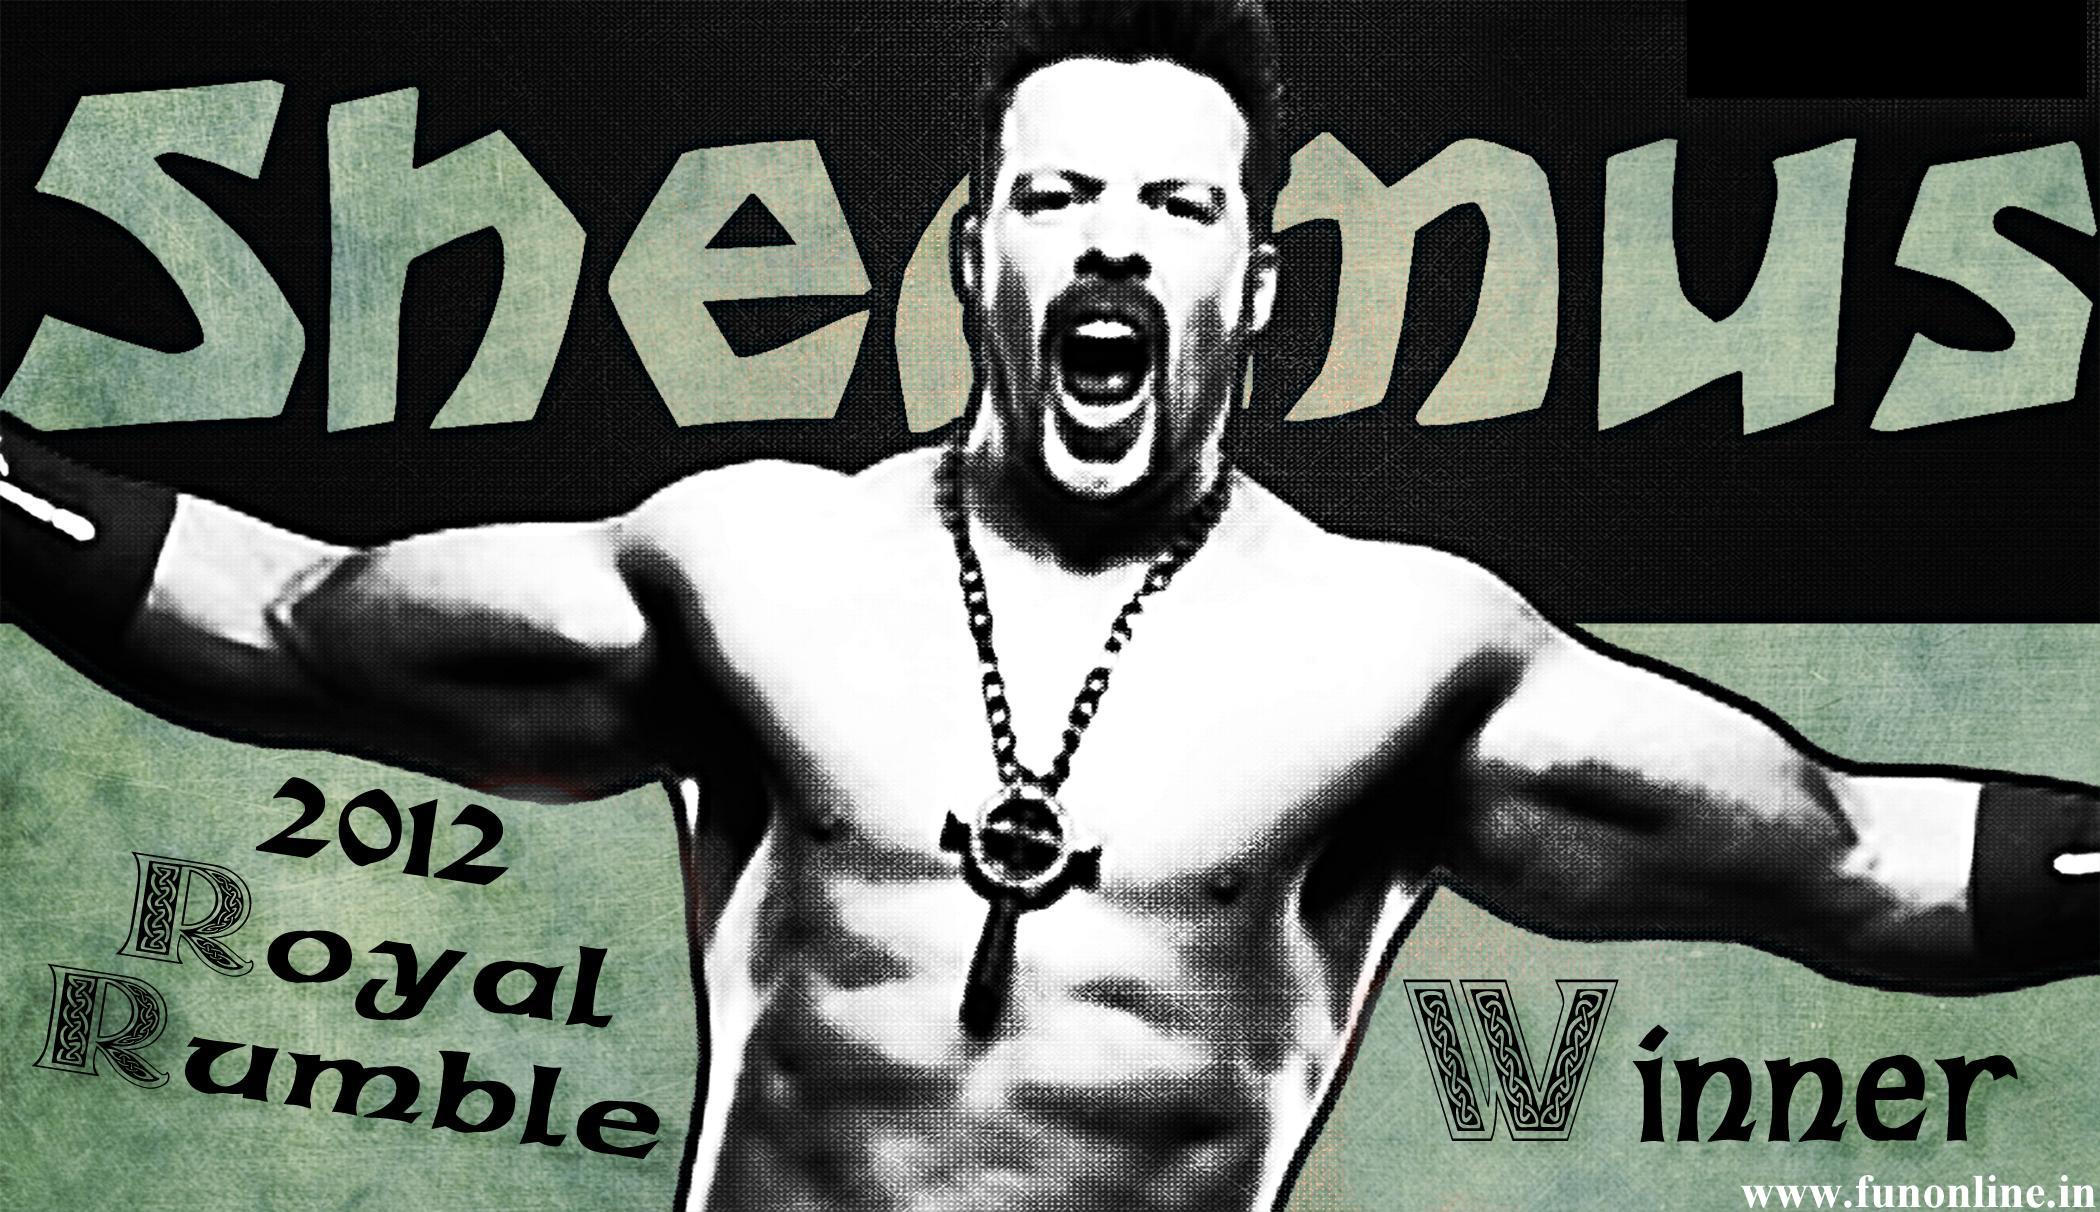 NEW Sheamus “Road to WrestleMania 28” wallpaper! - Kupy Wrestling Wallpapers